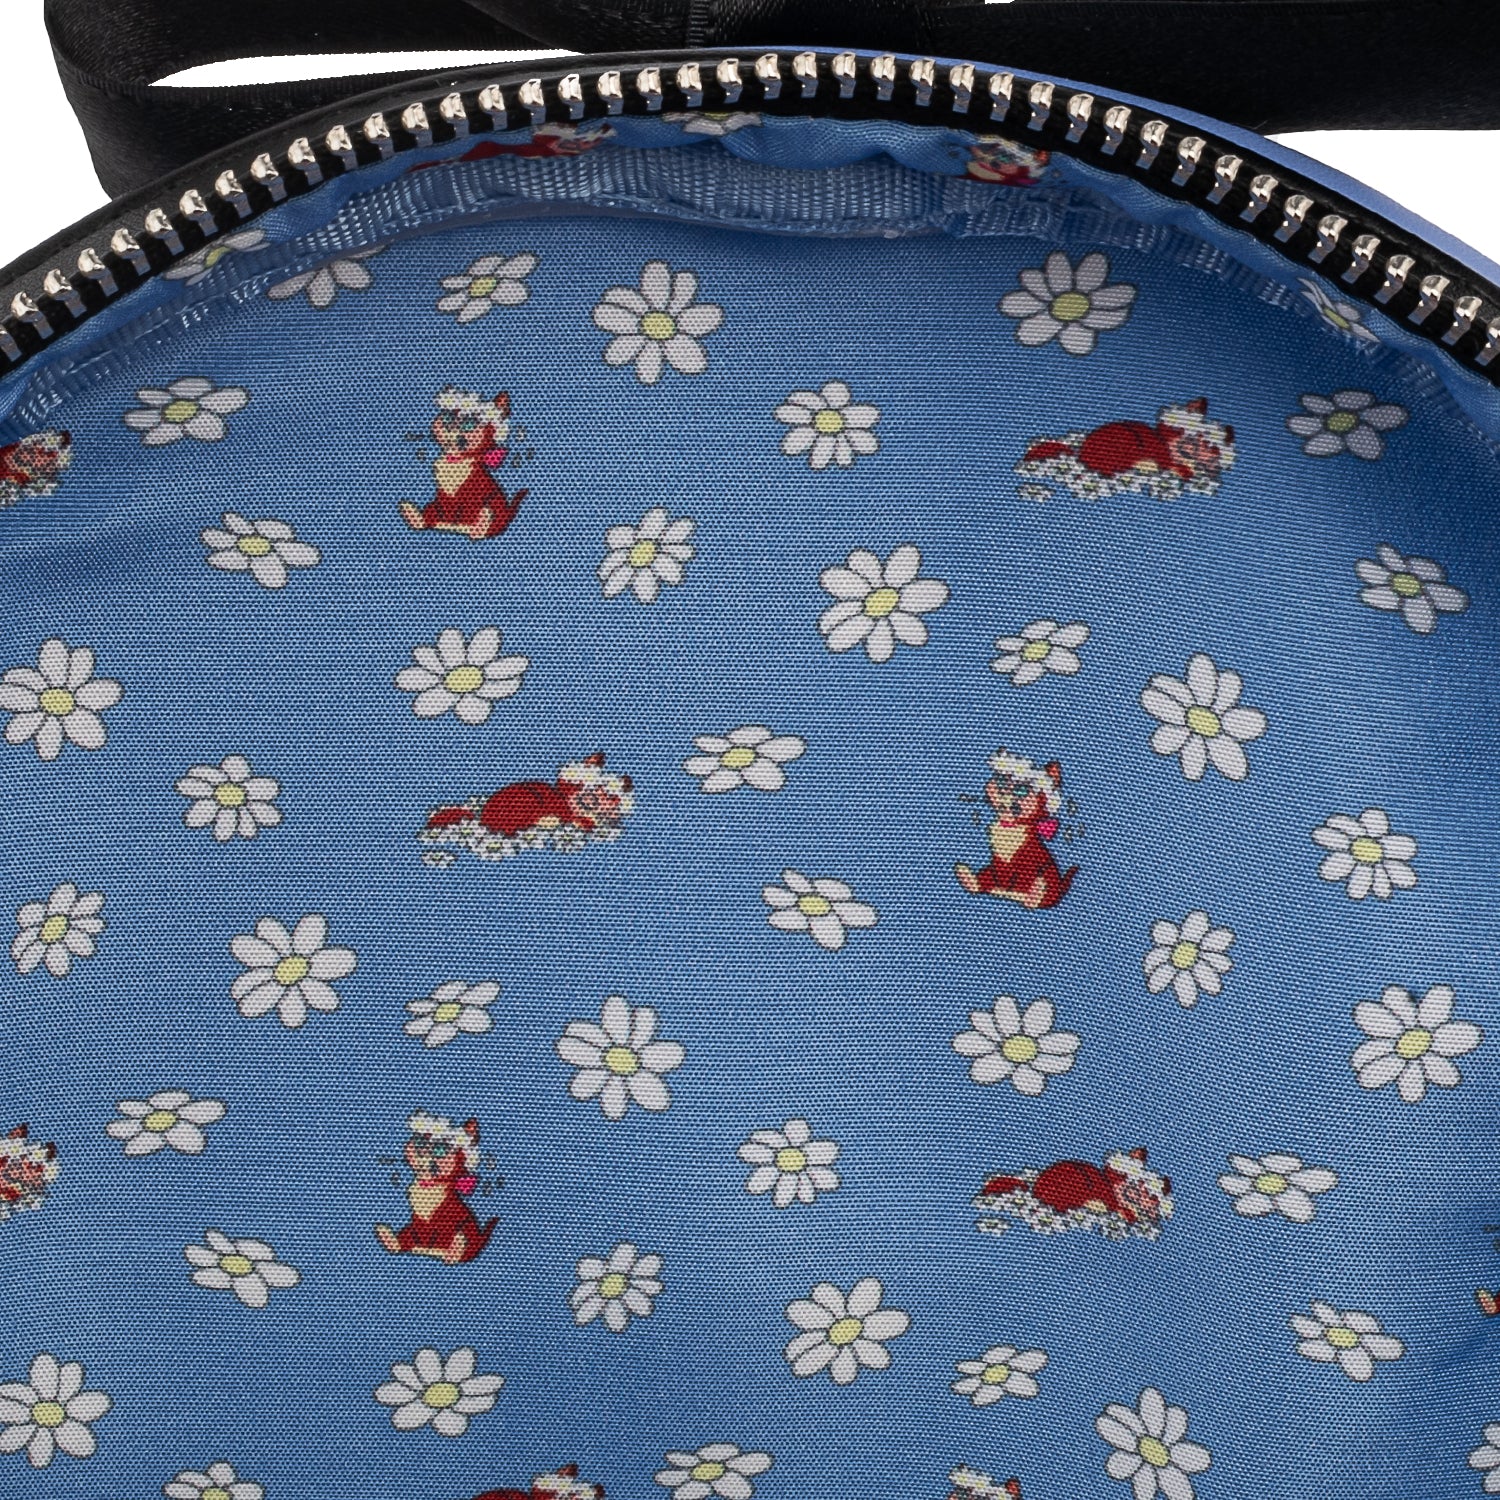 Disney | Alice in Wonderland Mini Backpack with Detachable Wristlet